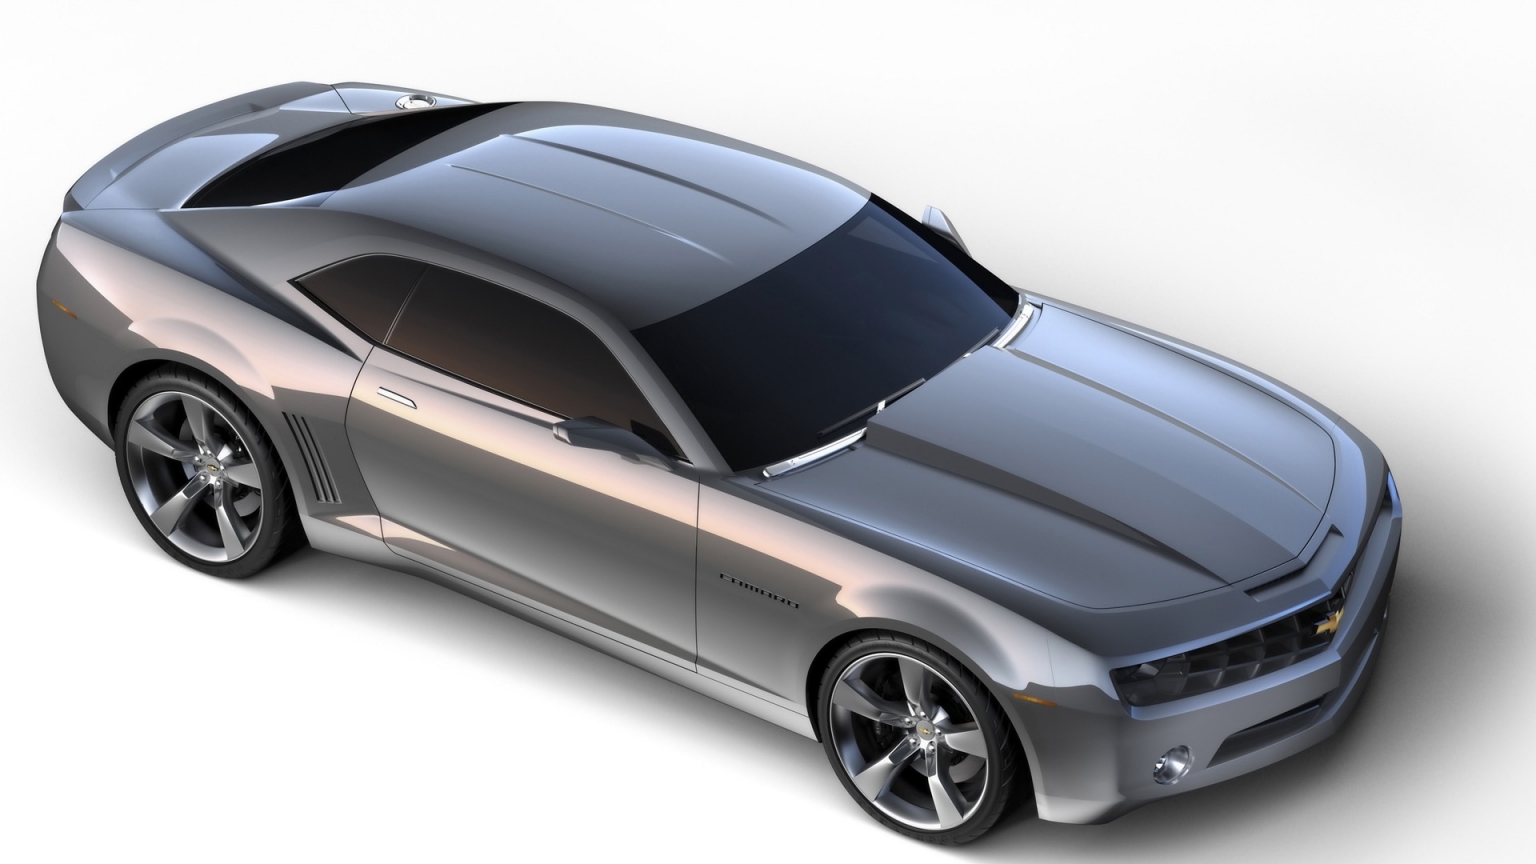 Chevrolet Camaro Grey Side Angle for 1536 x 864 HDTV resolution